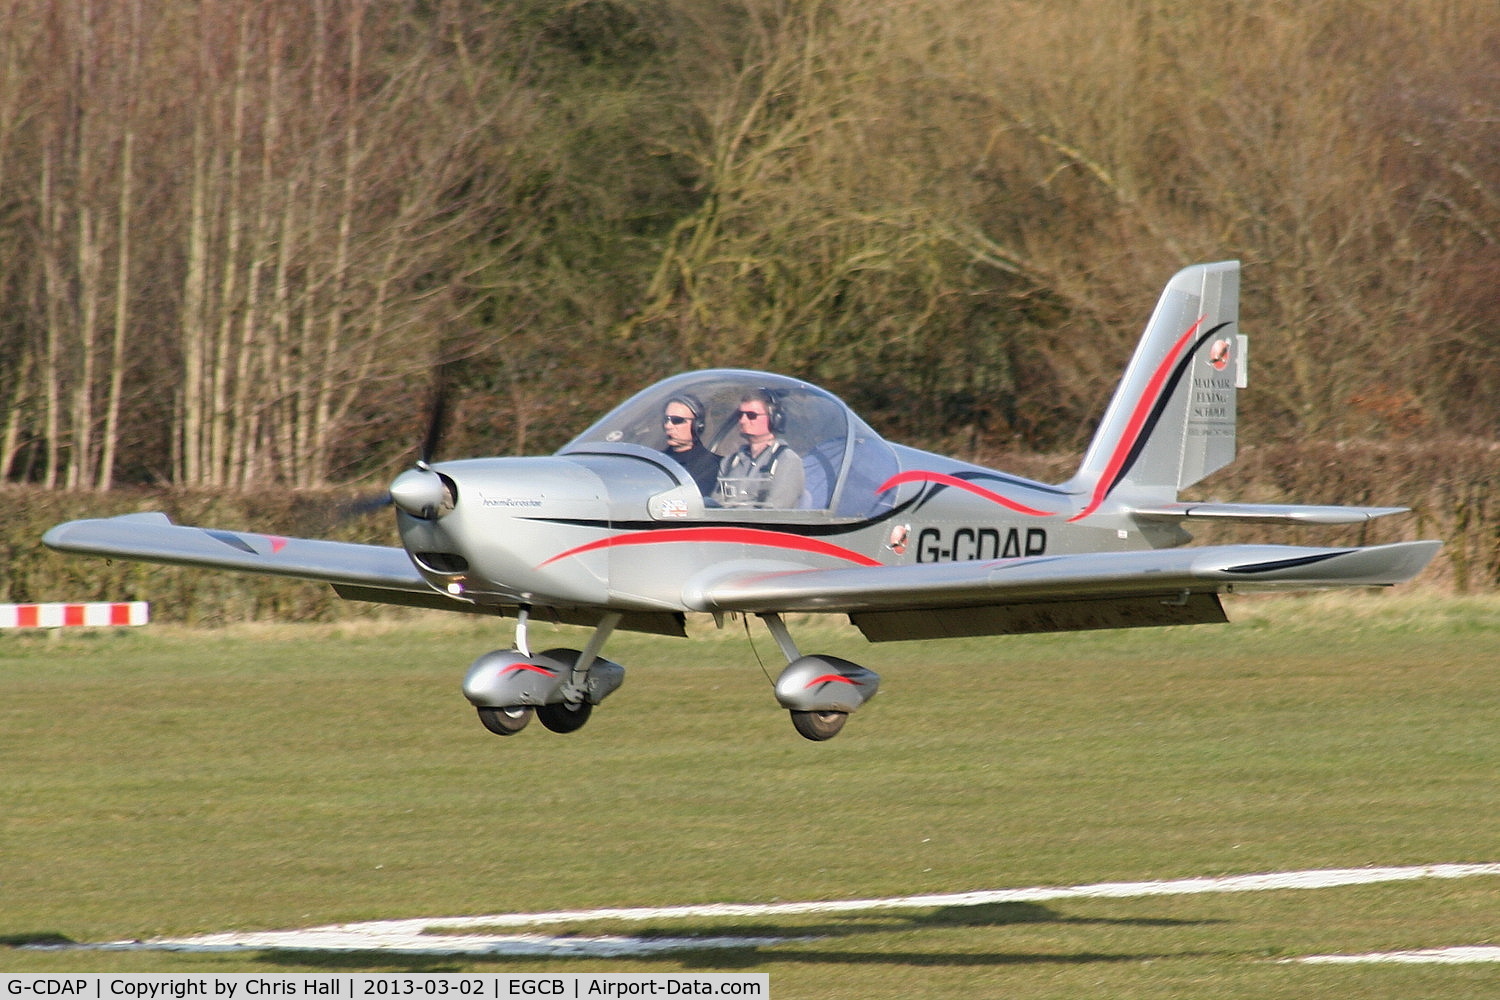 G-CDAP, 2004 Aerotechnik EV-97 TeamEurostar UK C/N 2114, Mainair Microlight School